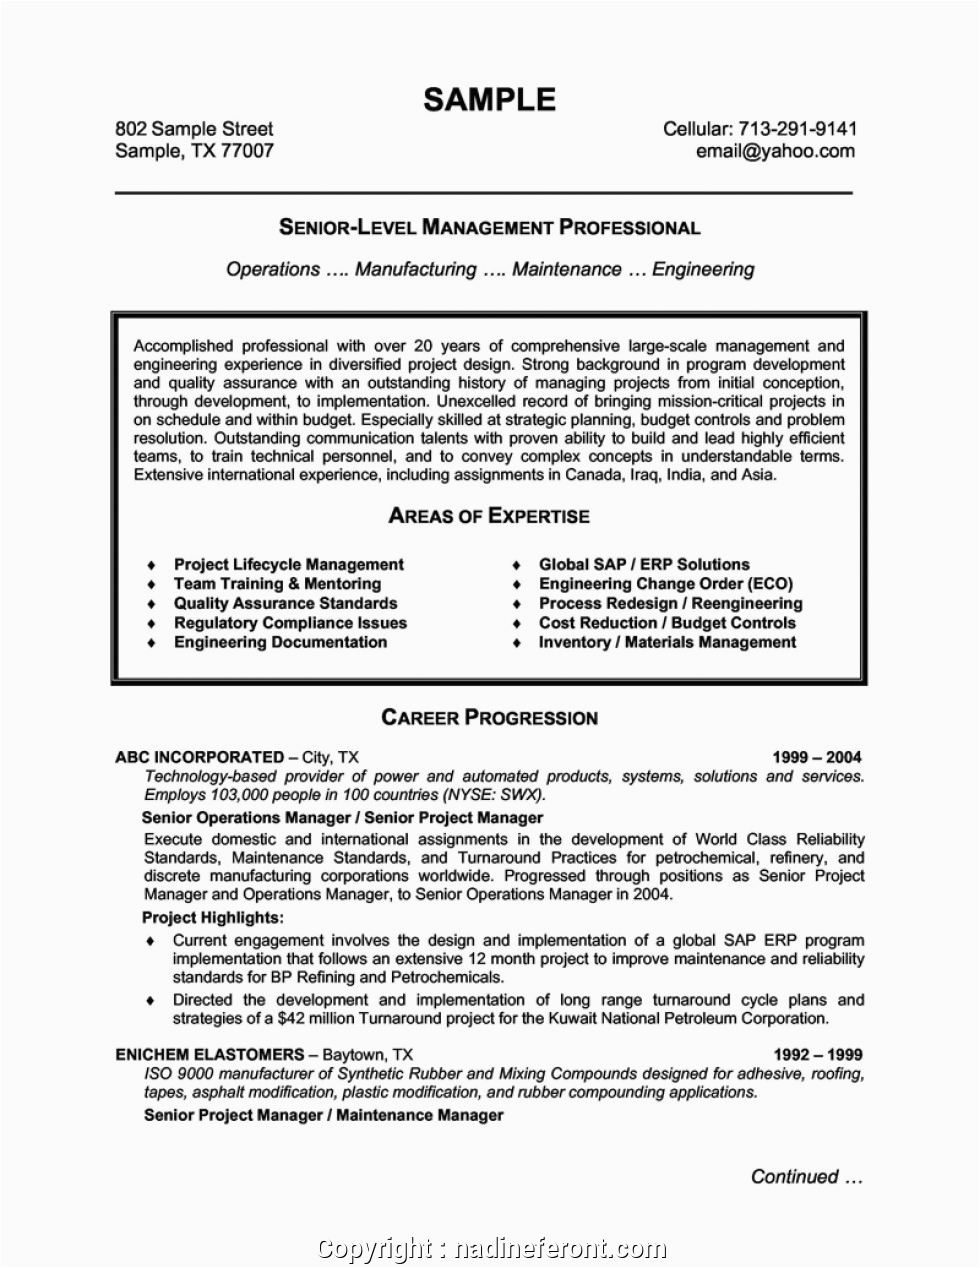 Sample Of Professional Profile On Resume Professional Management Resume Profile Samples Management